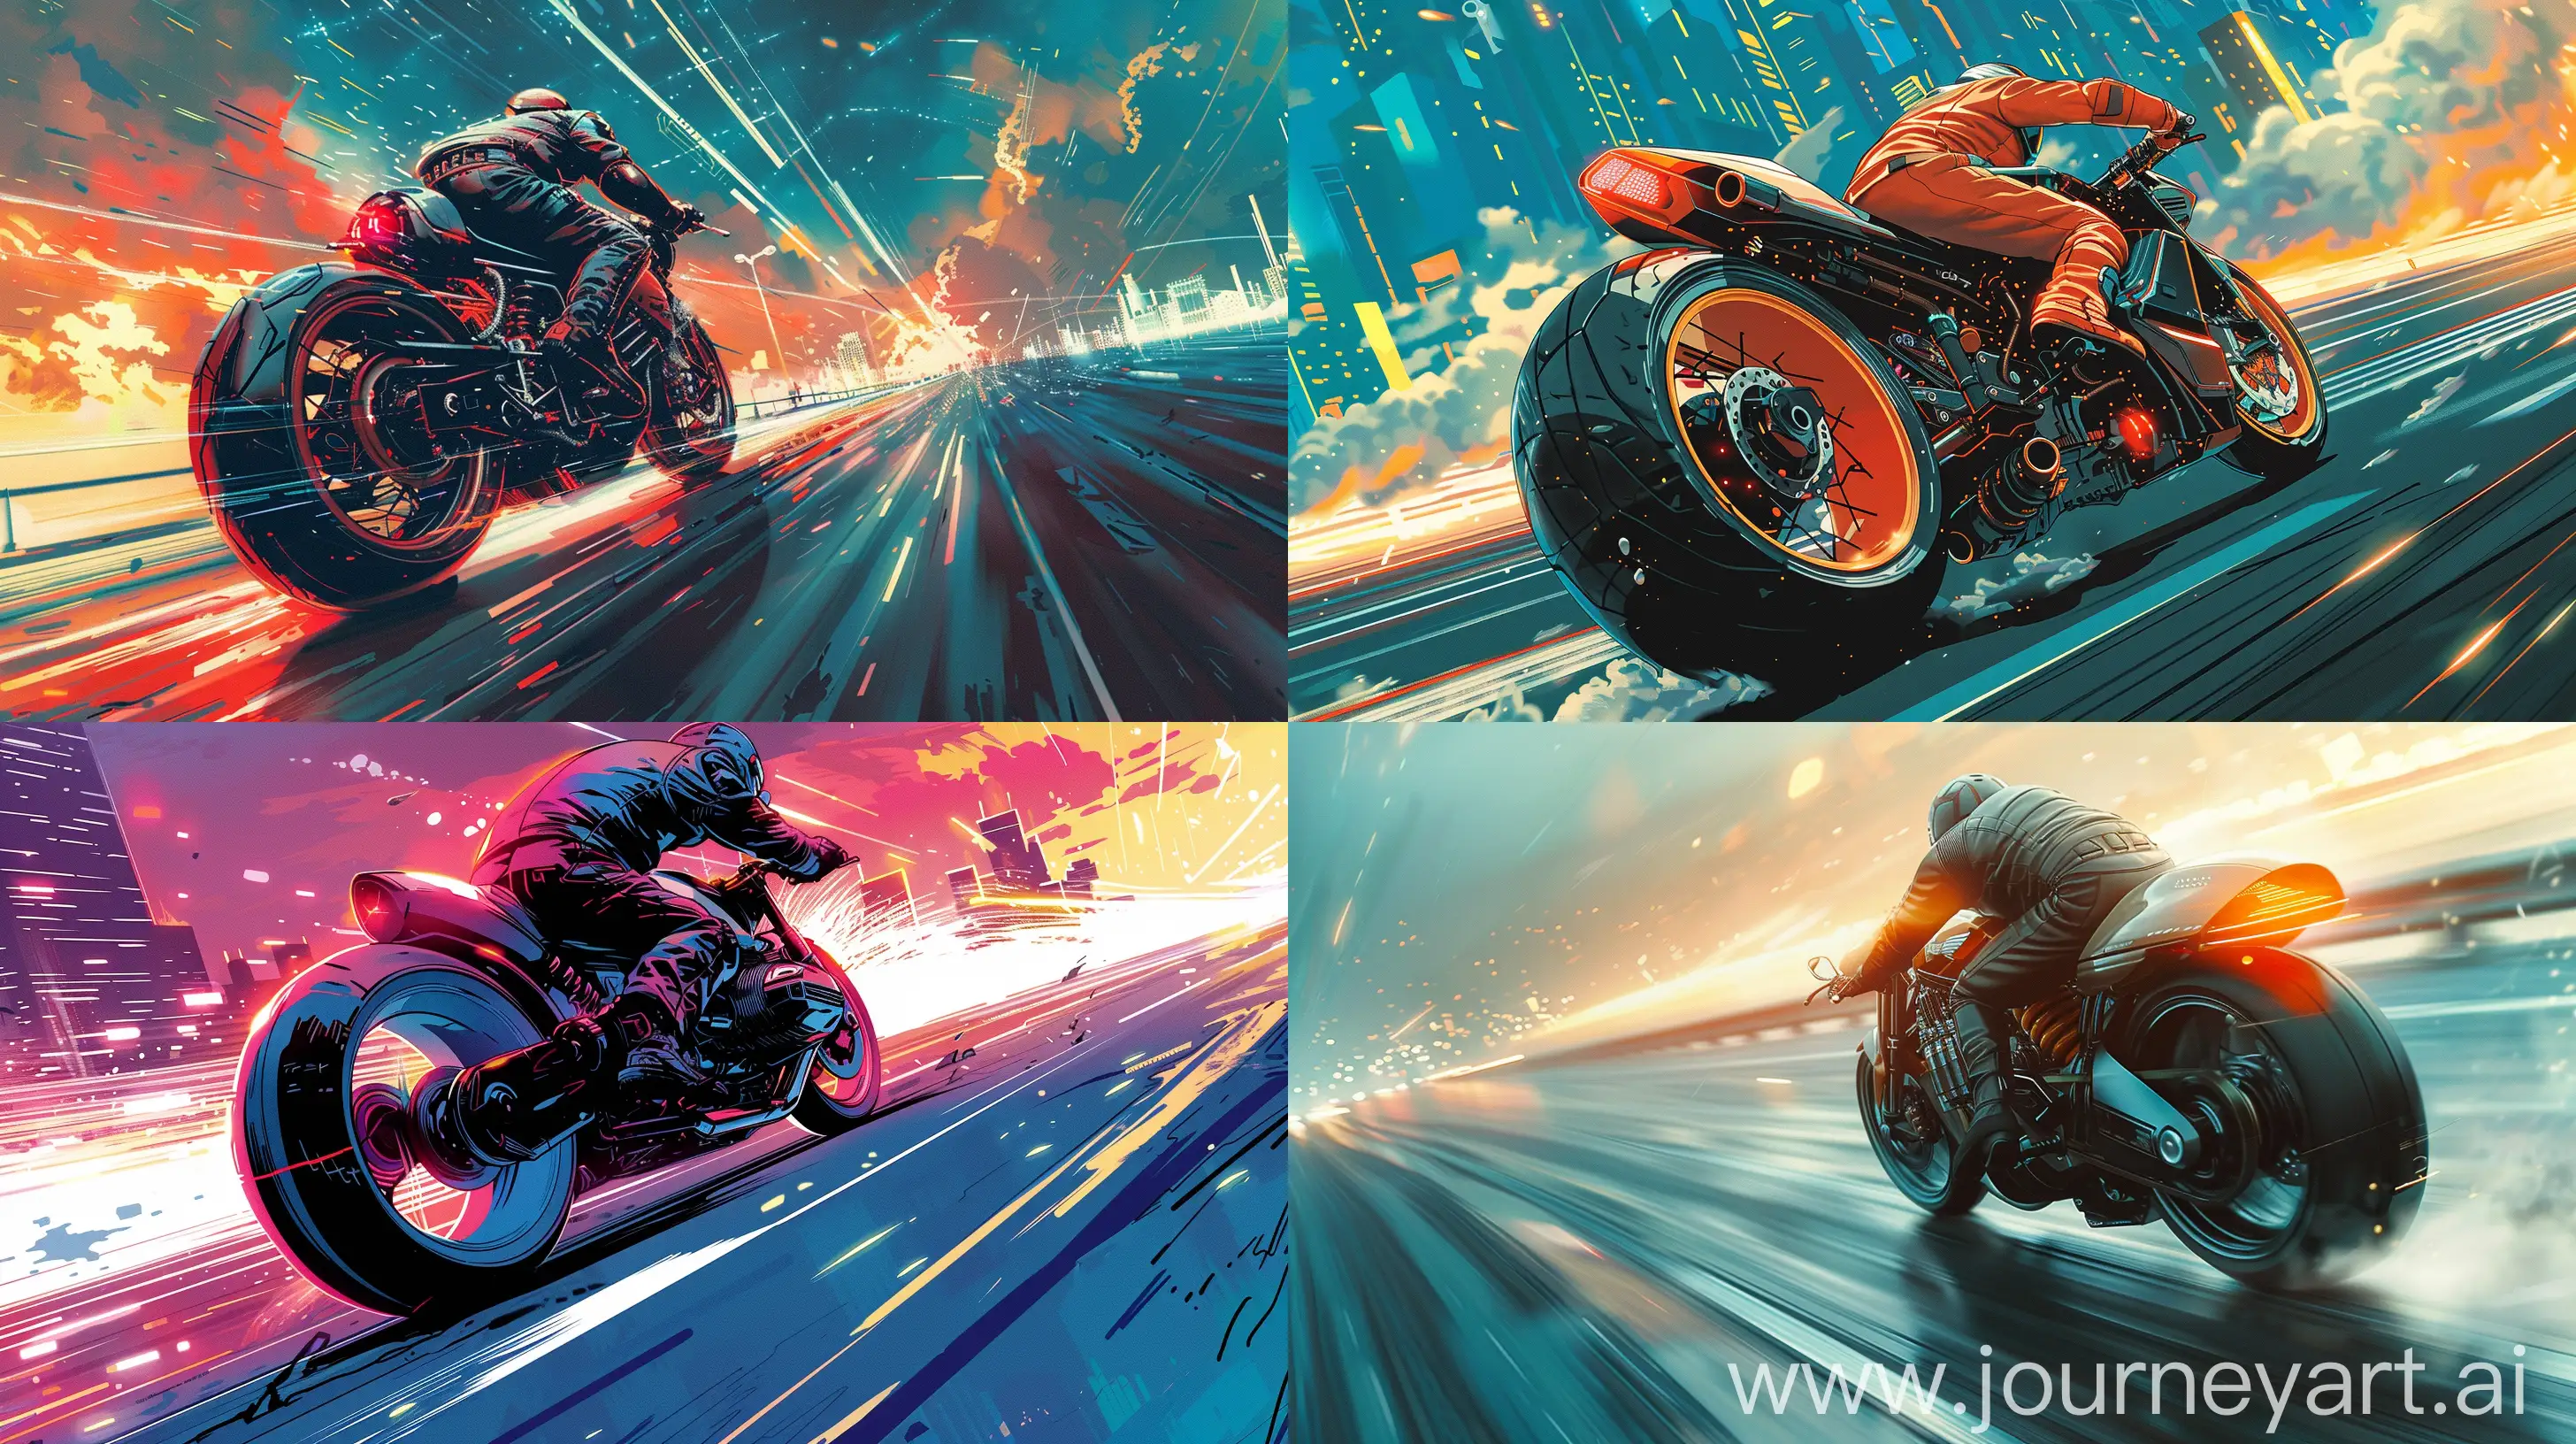 Cyberpunk-Motorcycle-Ride-through-Anime-Cityscape